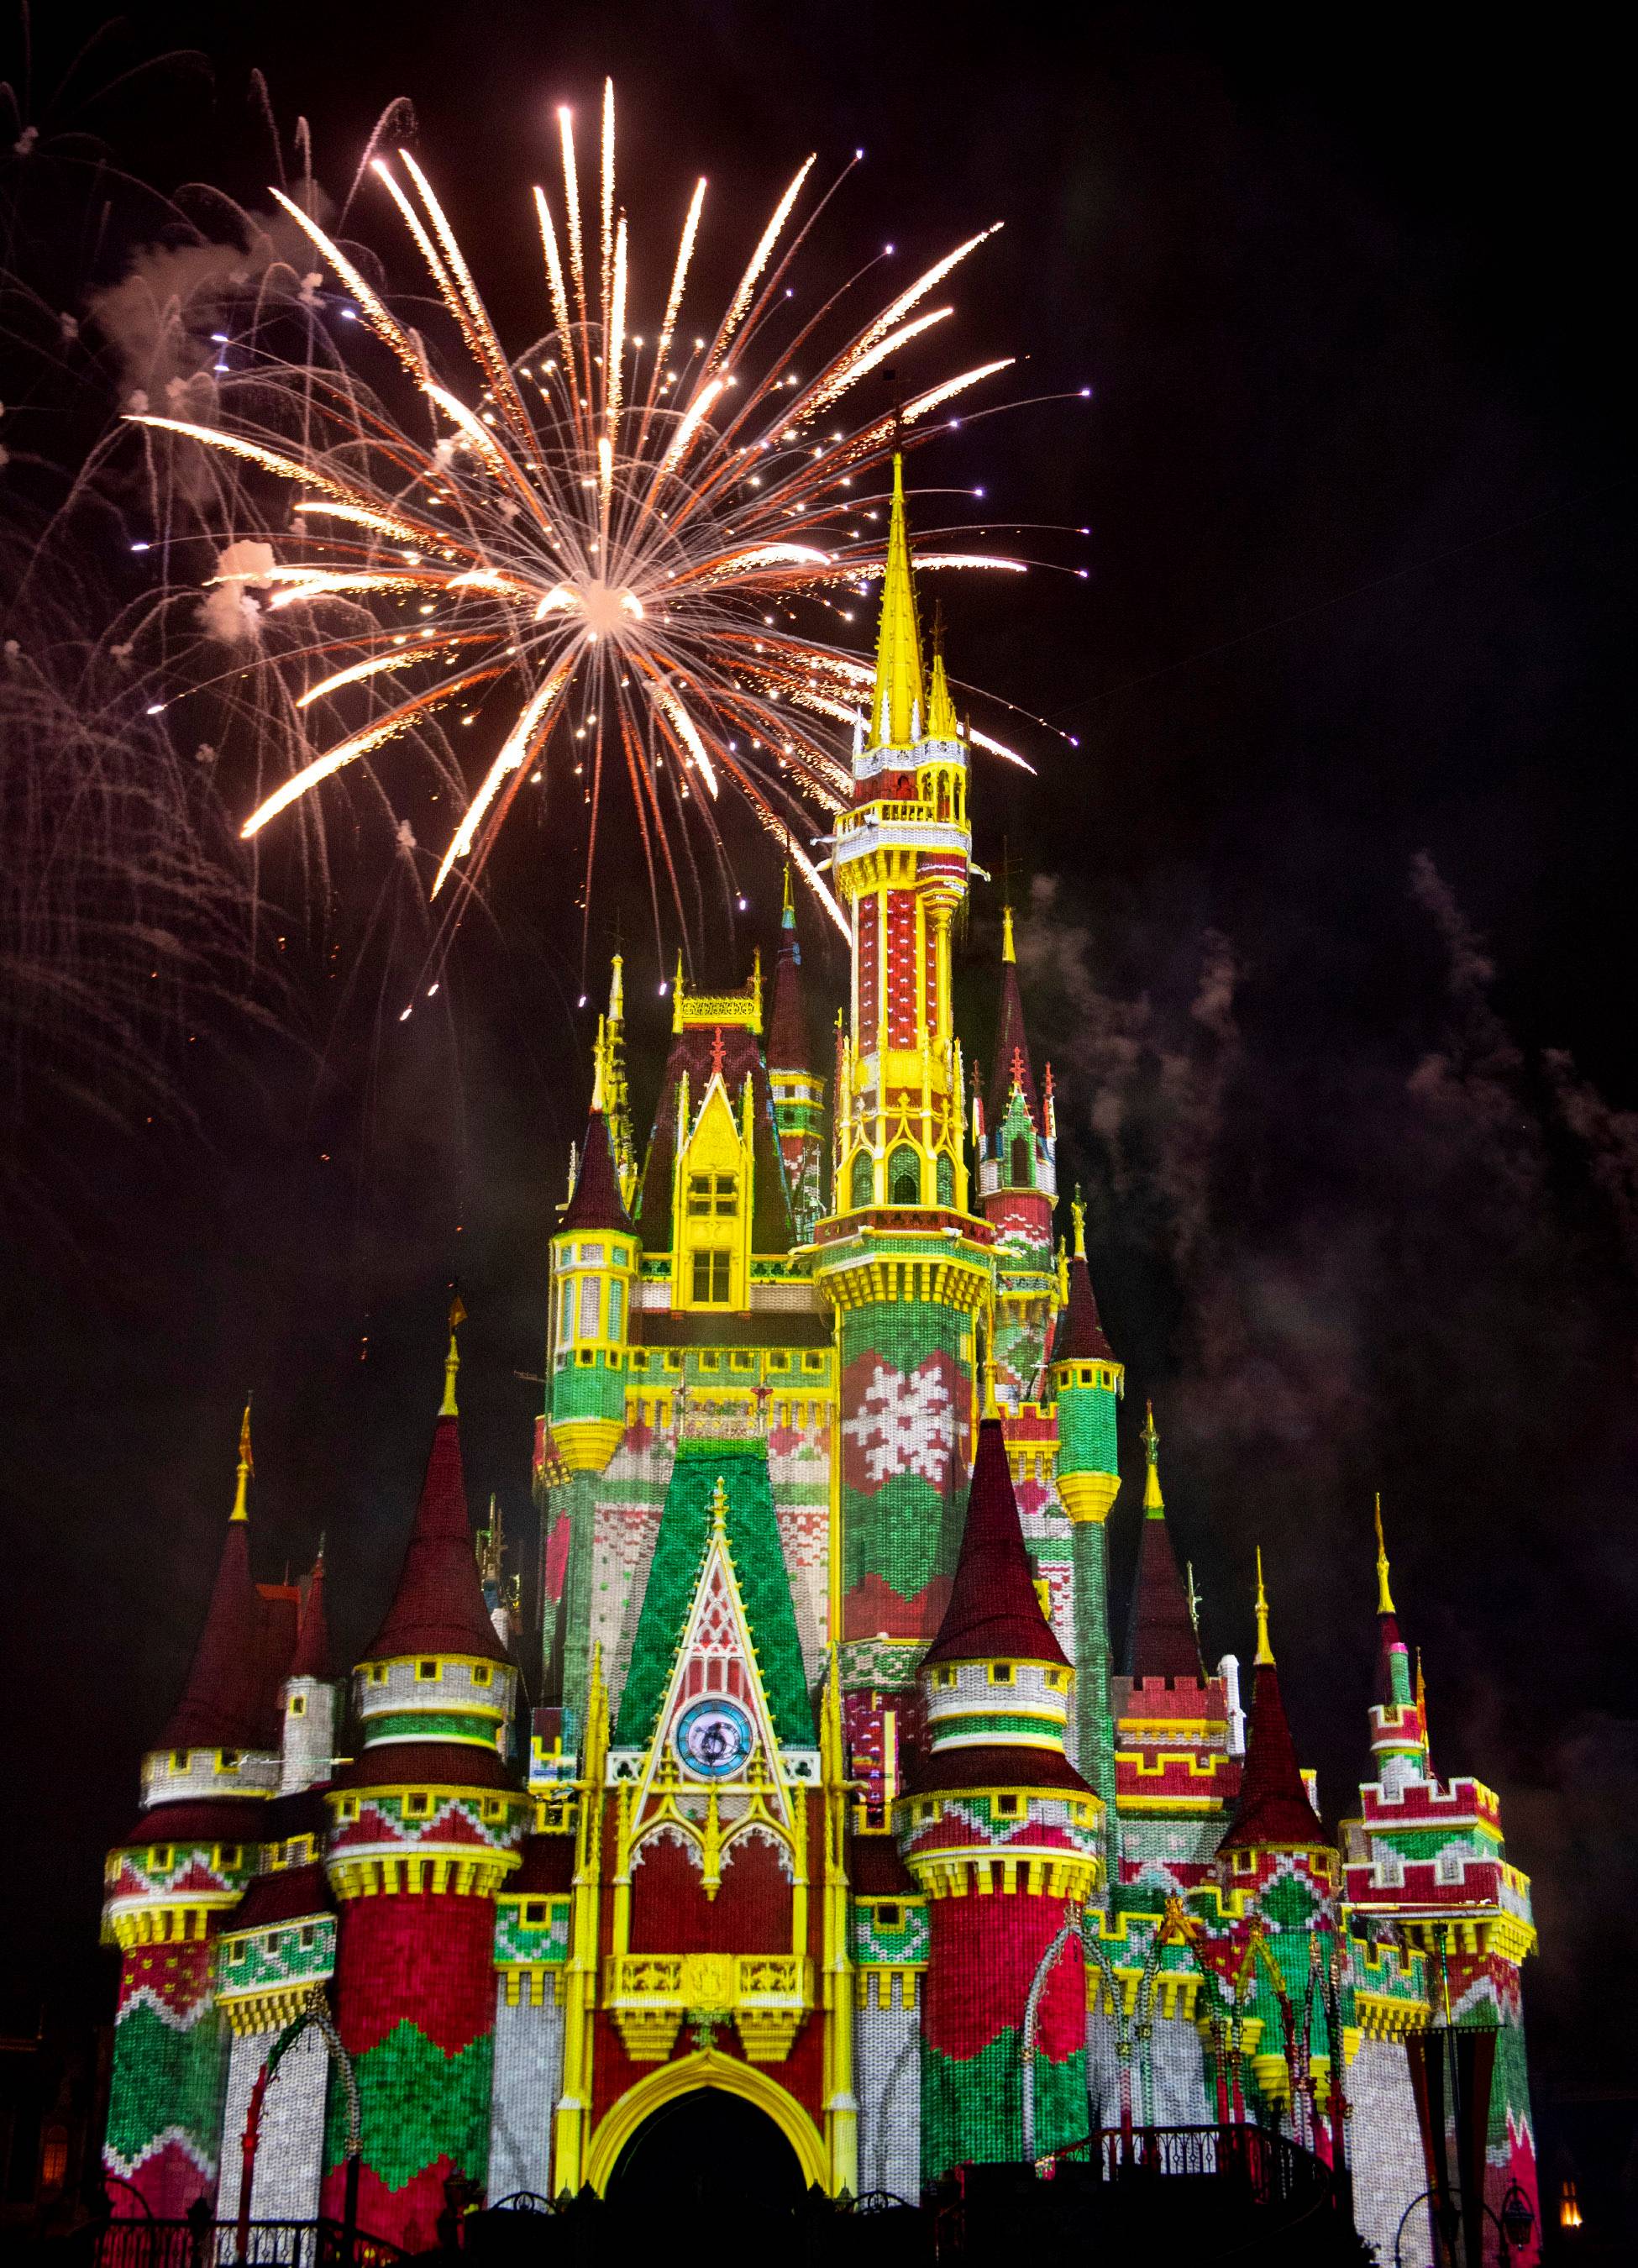 VIDEO - Sneak peek at Minnie's Wonderful Christmastime Fireworks